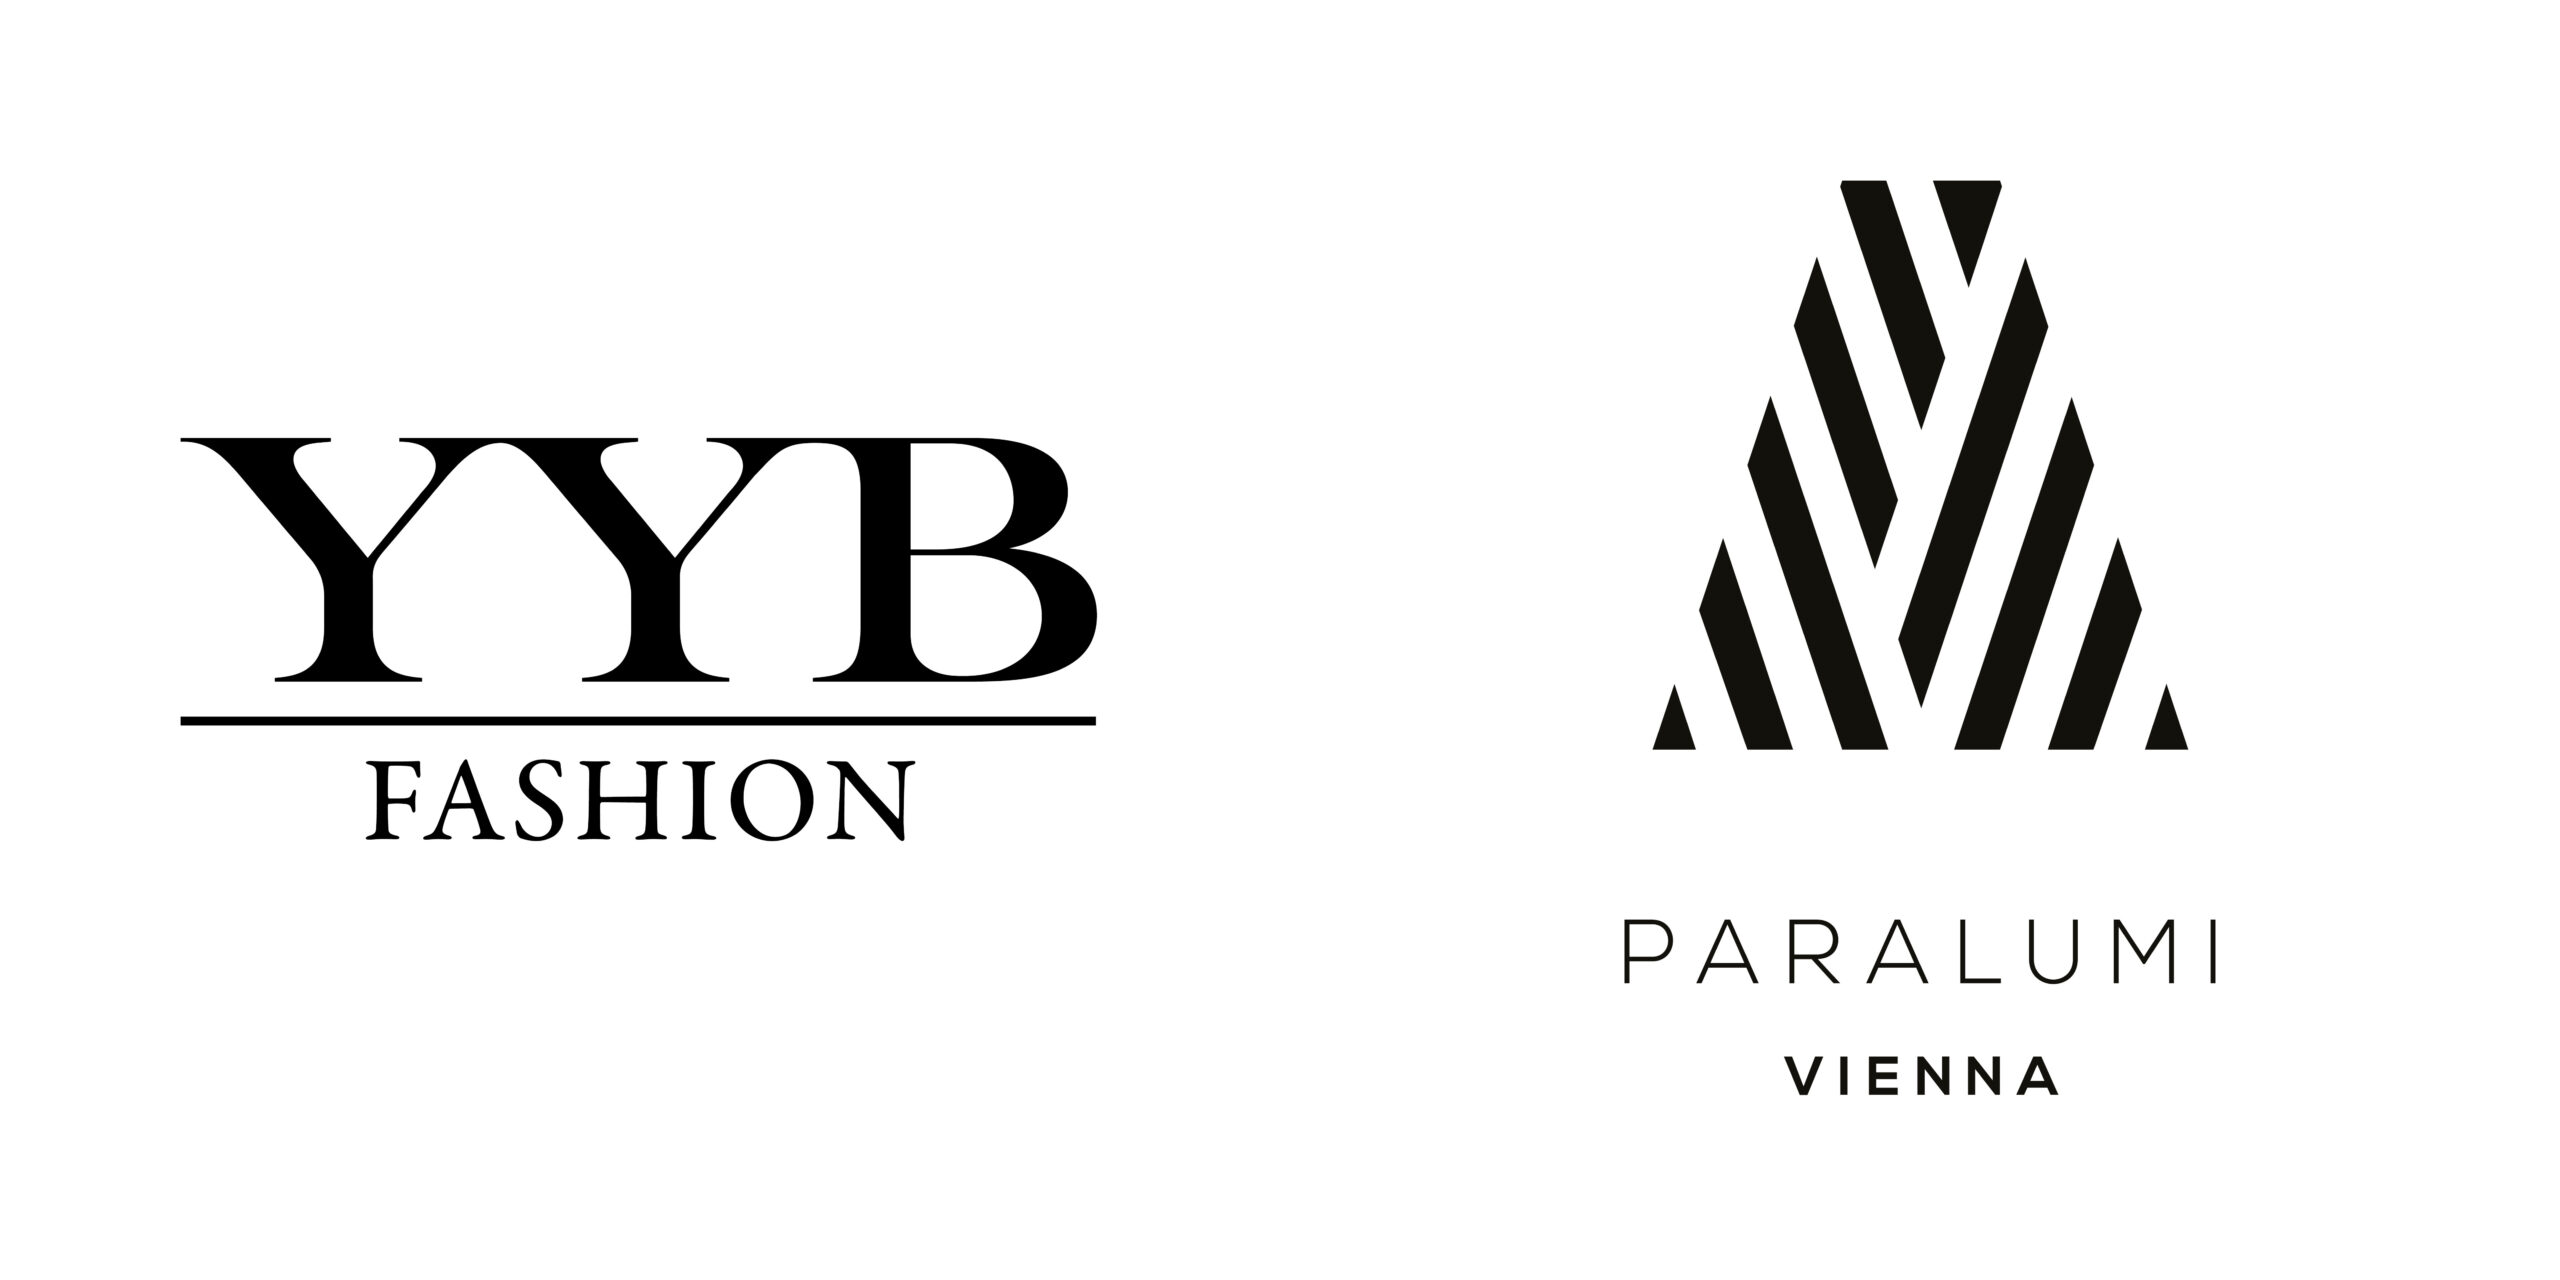 PARALUMI-VIENNA & YYB-FASHION